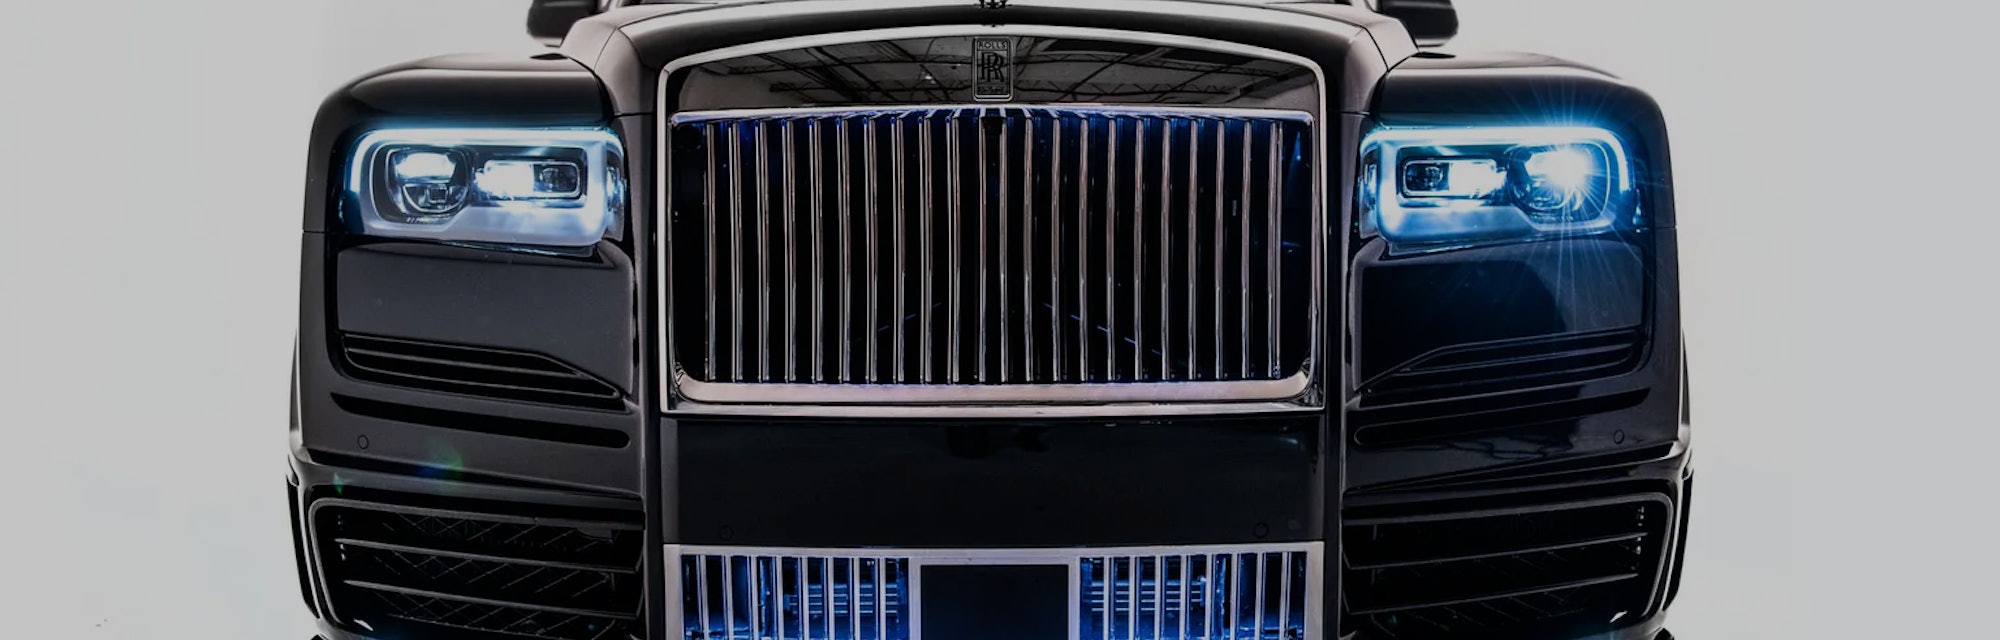 Chrome Hearts custom Drake Rolls-Royce